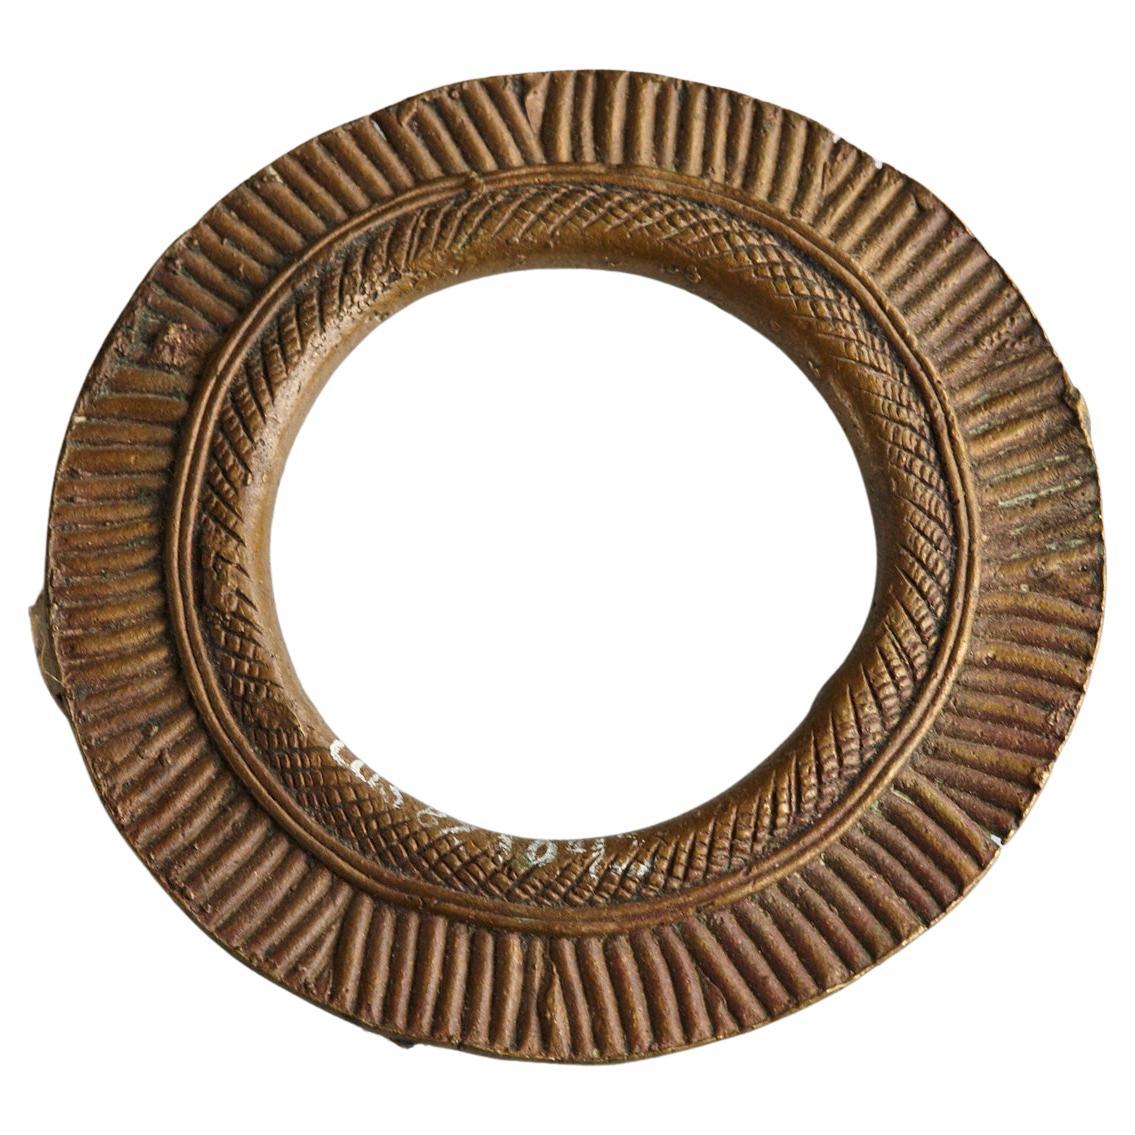 Bronze Currency Bracelet/Manilla, Beri People, Sudan, 19th Century - No 2